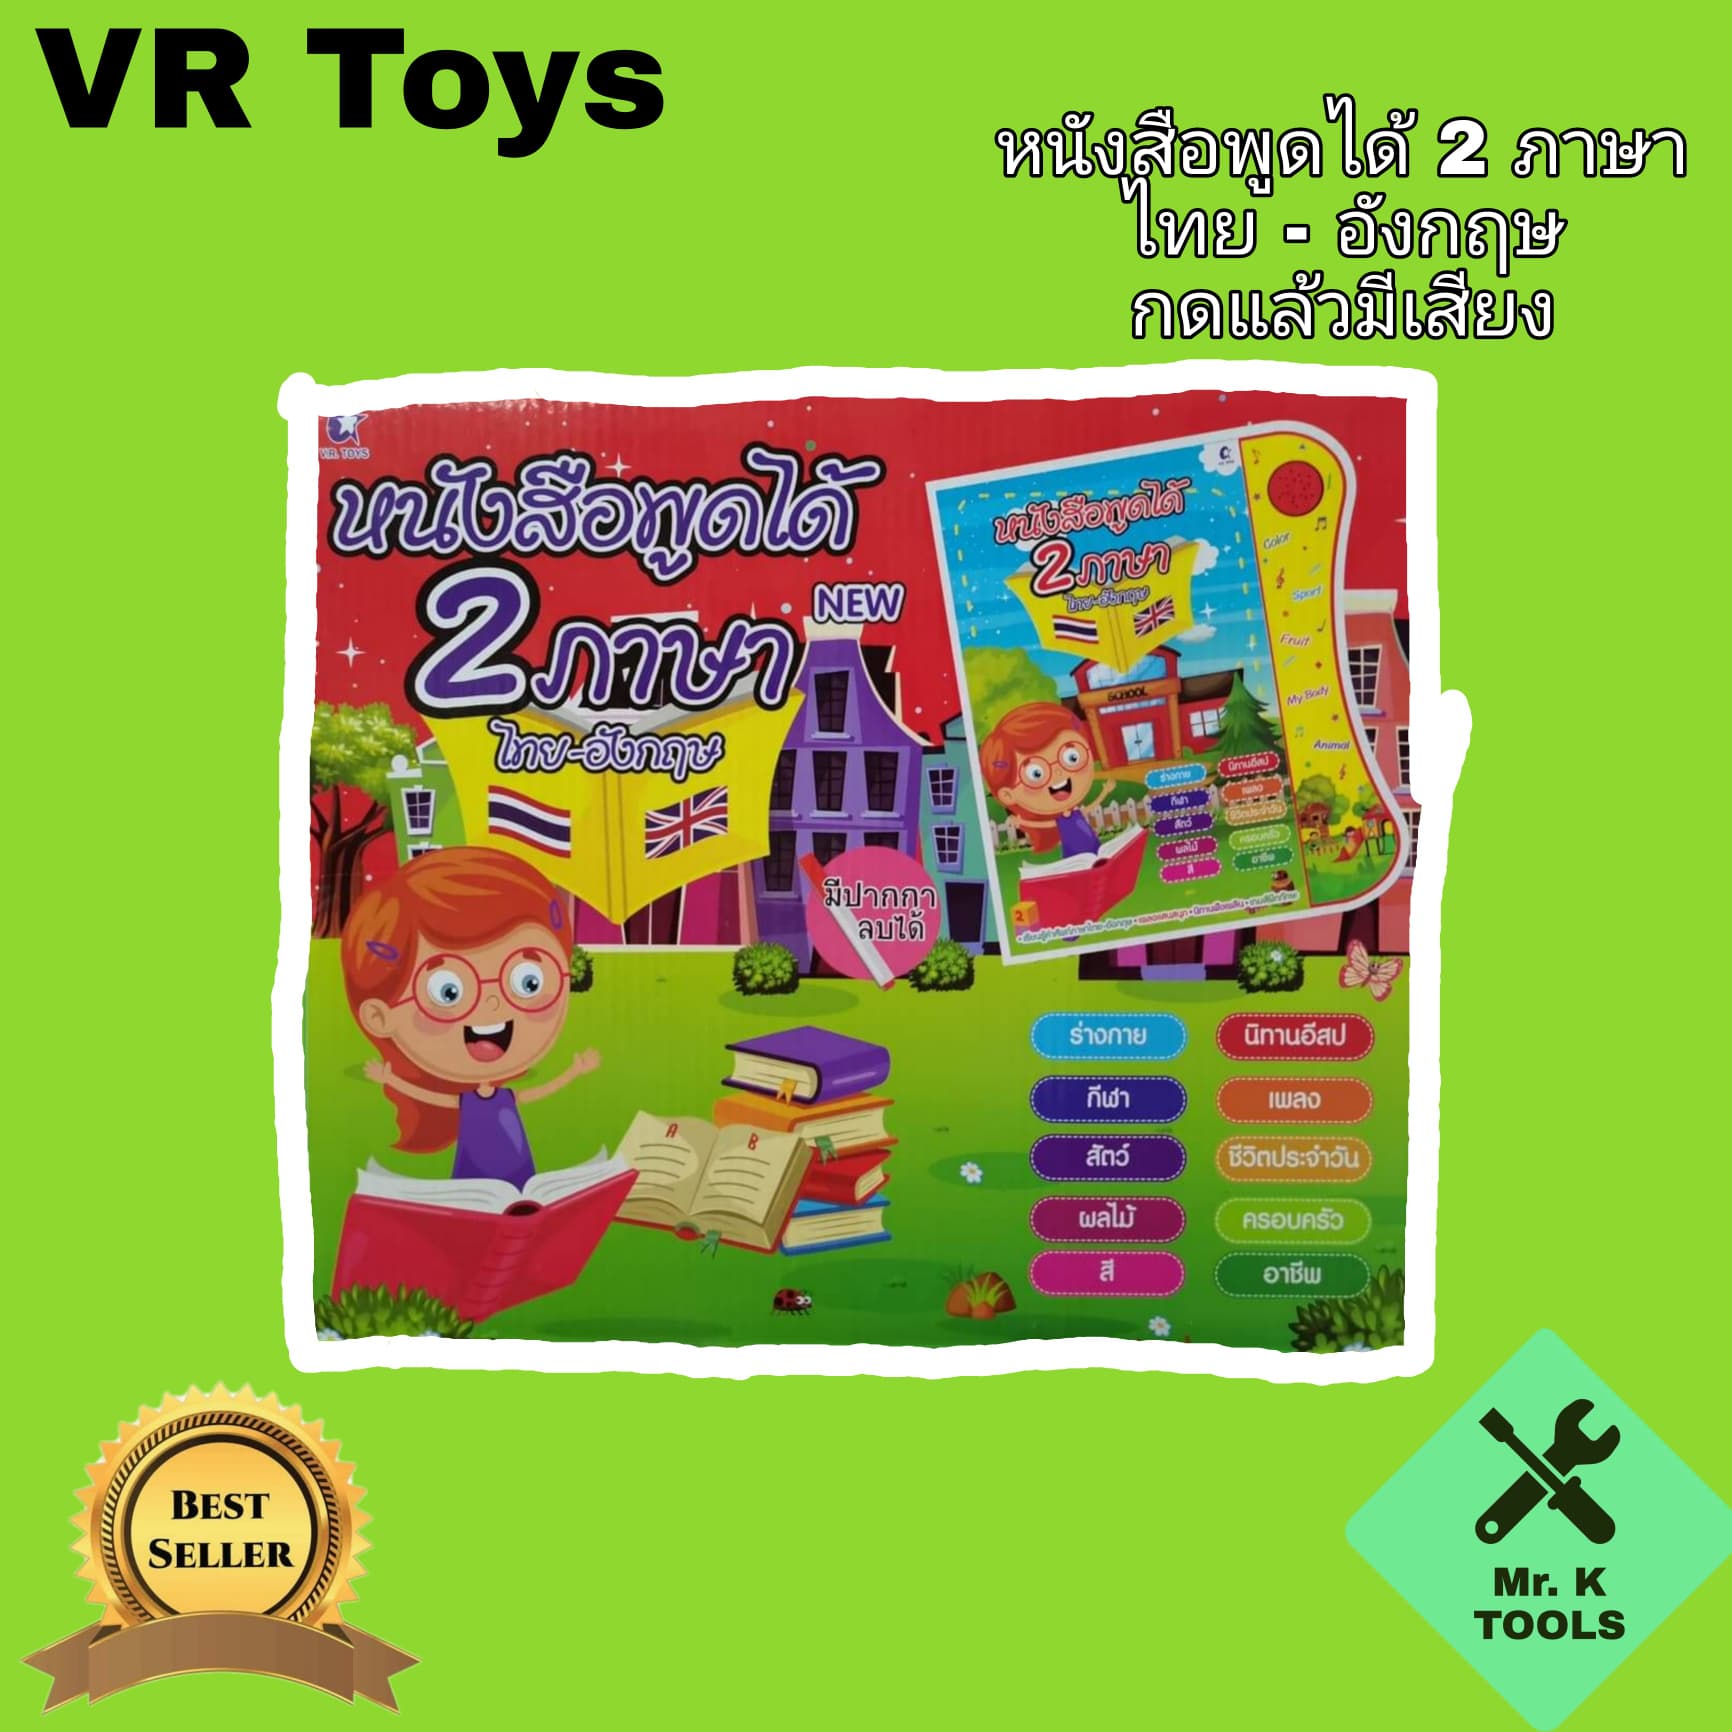 VR Toys(วีอาร์ทอยส์) หนังสือพูดได้ 2 ภาษา ไทย อังกฤษ ราคาถูก